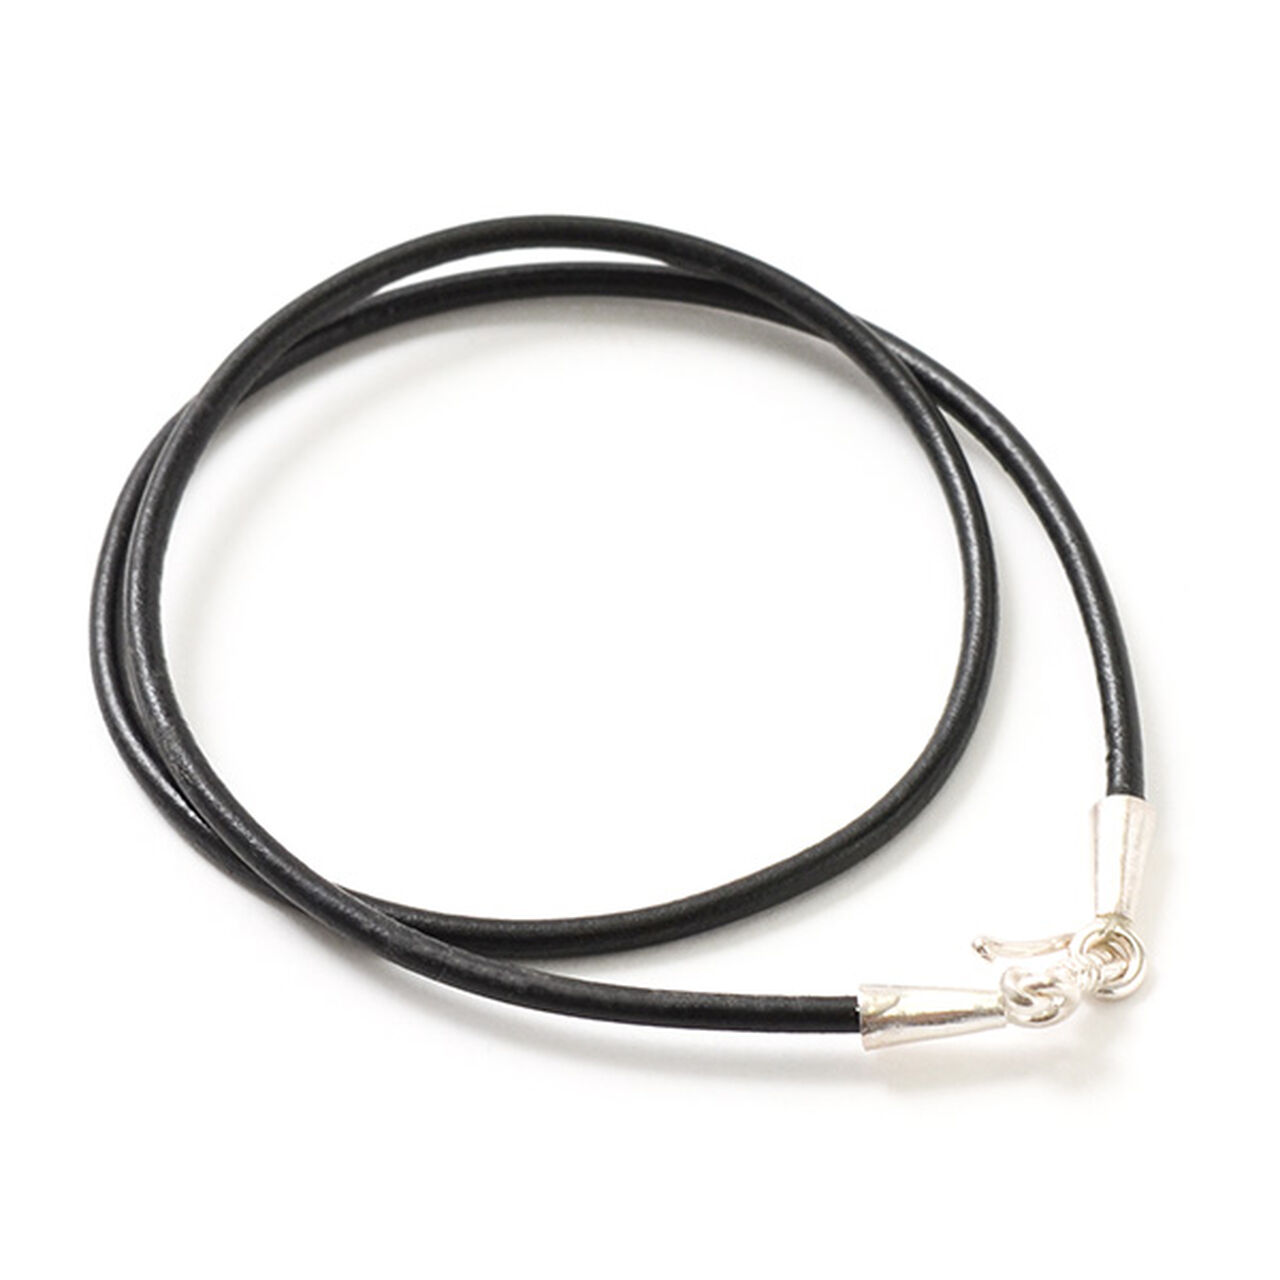 Leather choker (2.5mm) necklace,Black, large image number 0